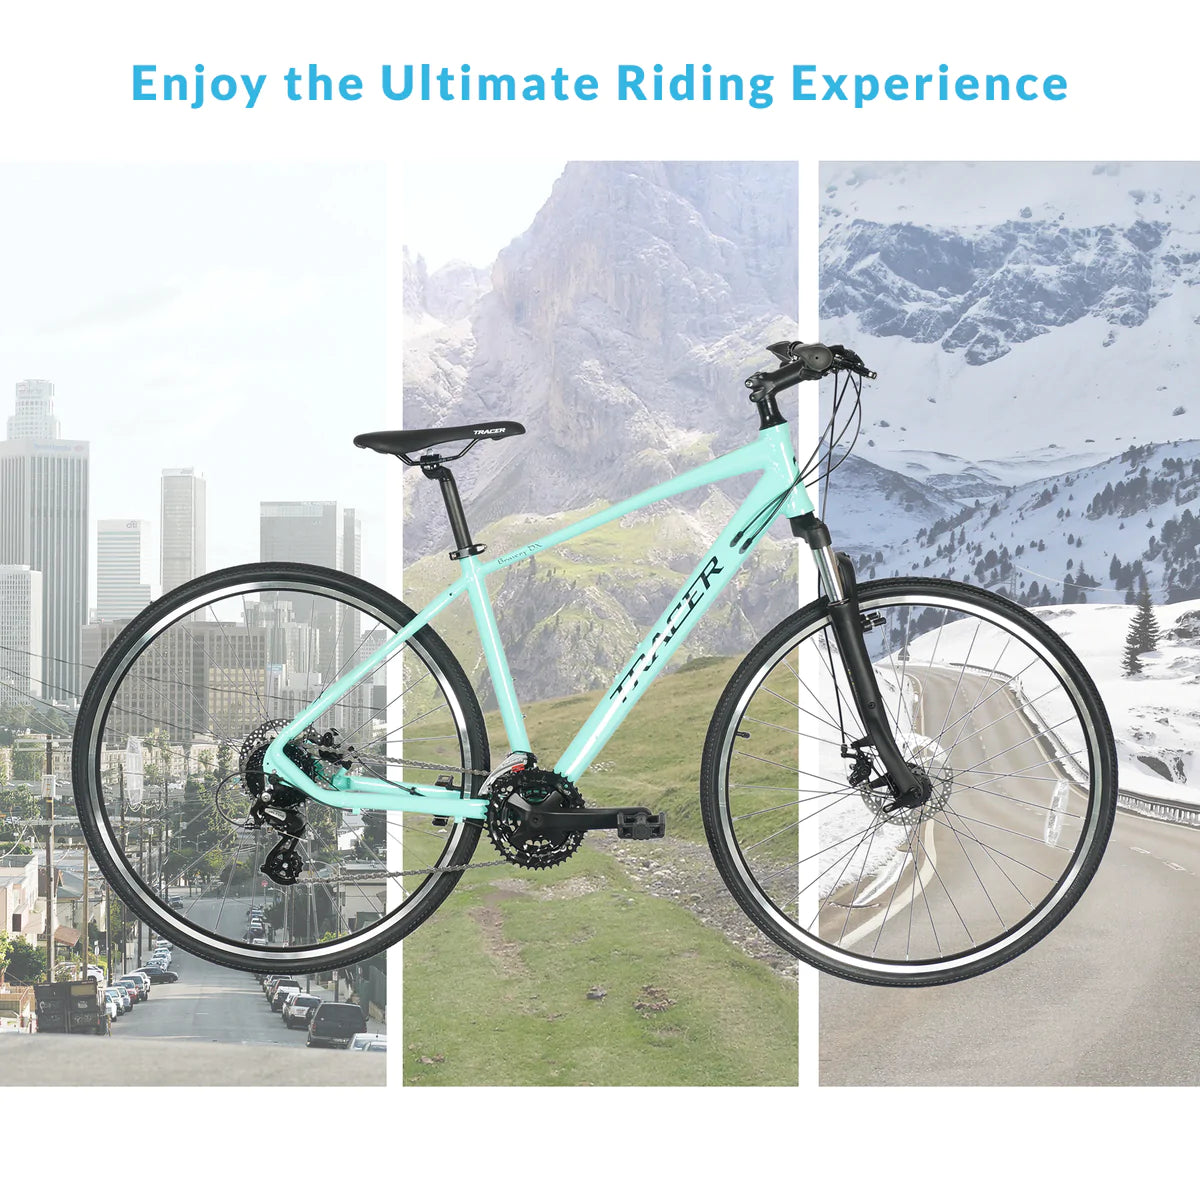 Tracer Bravery DX Hybrid City Bike | City Bike | Road Bike | Bike Lover USA